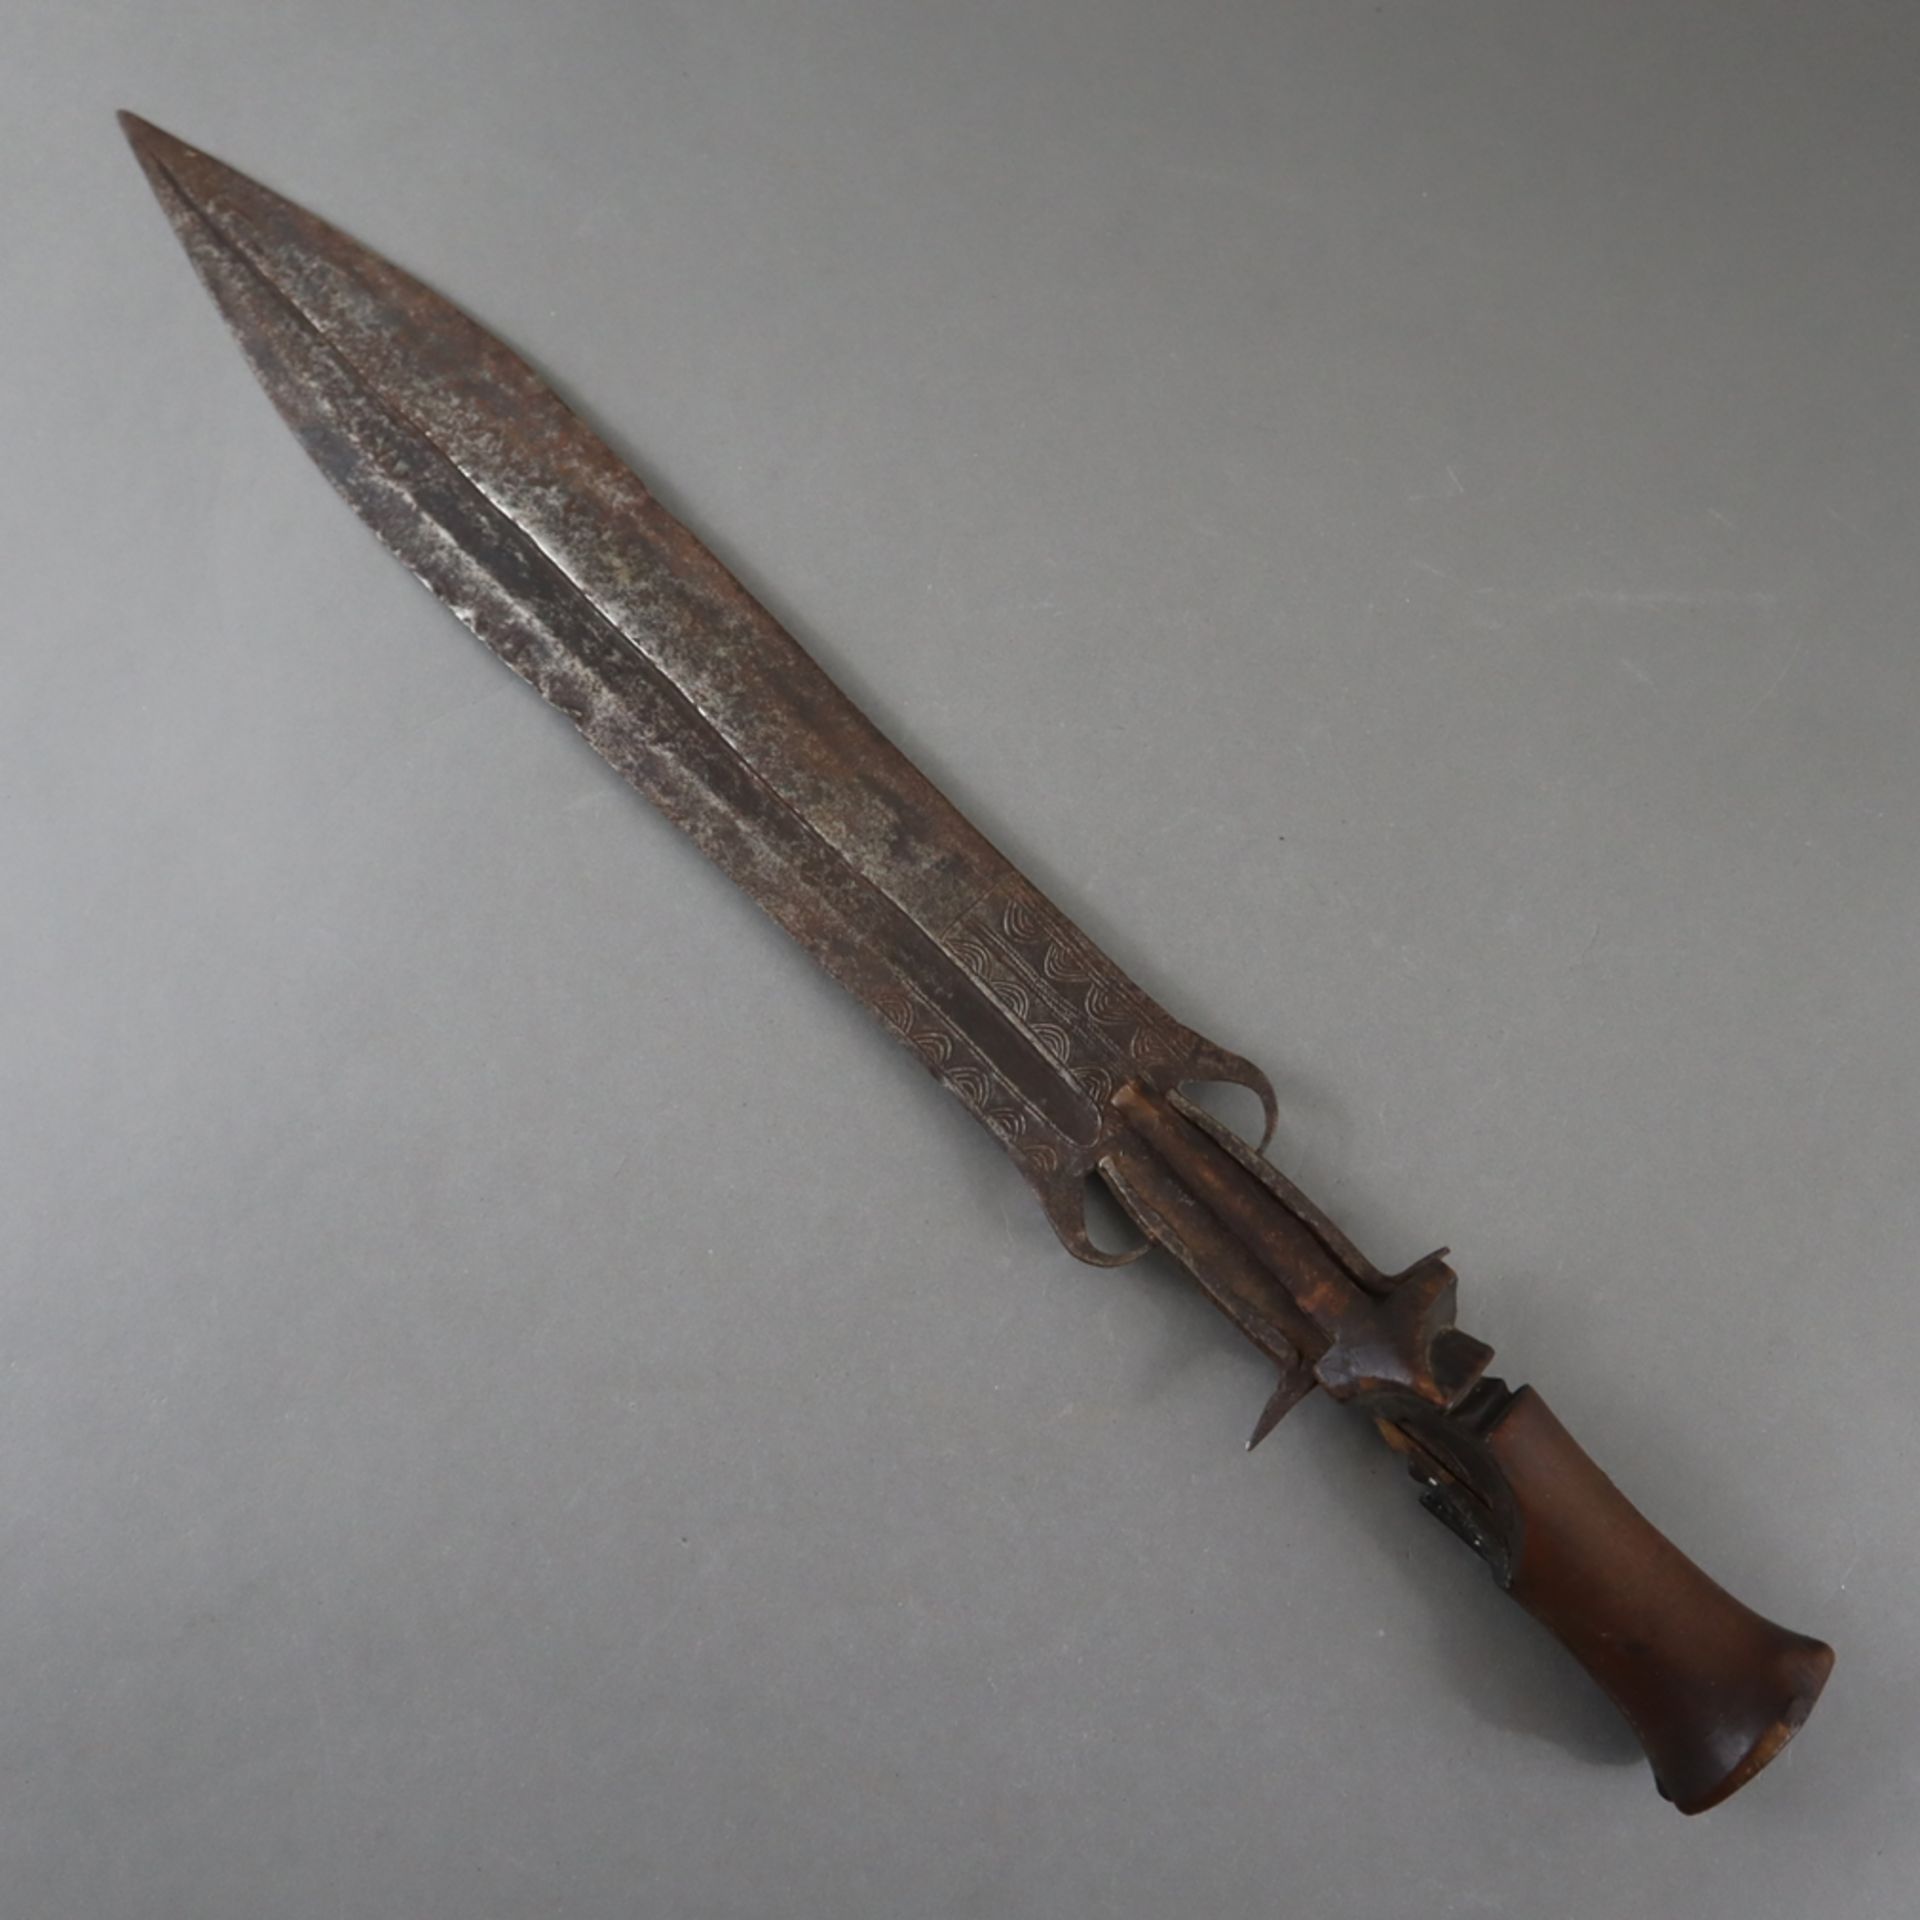 Kurzschwert "ntsakh" - Zentralafrika, Fang, blattförmige, gegradete Klinge, am Ansatz spitze, haken